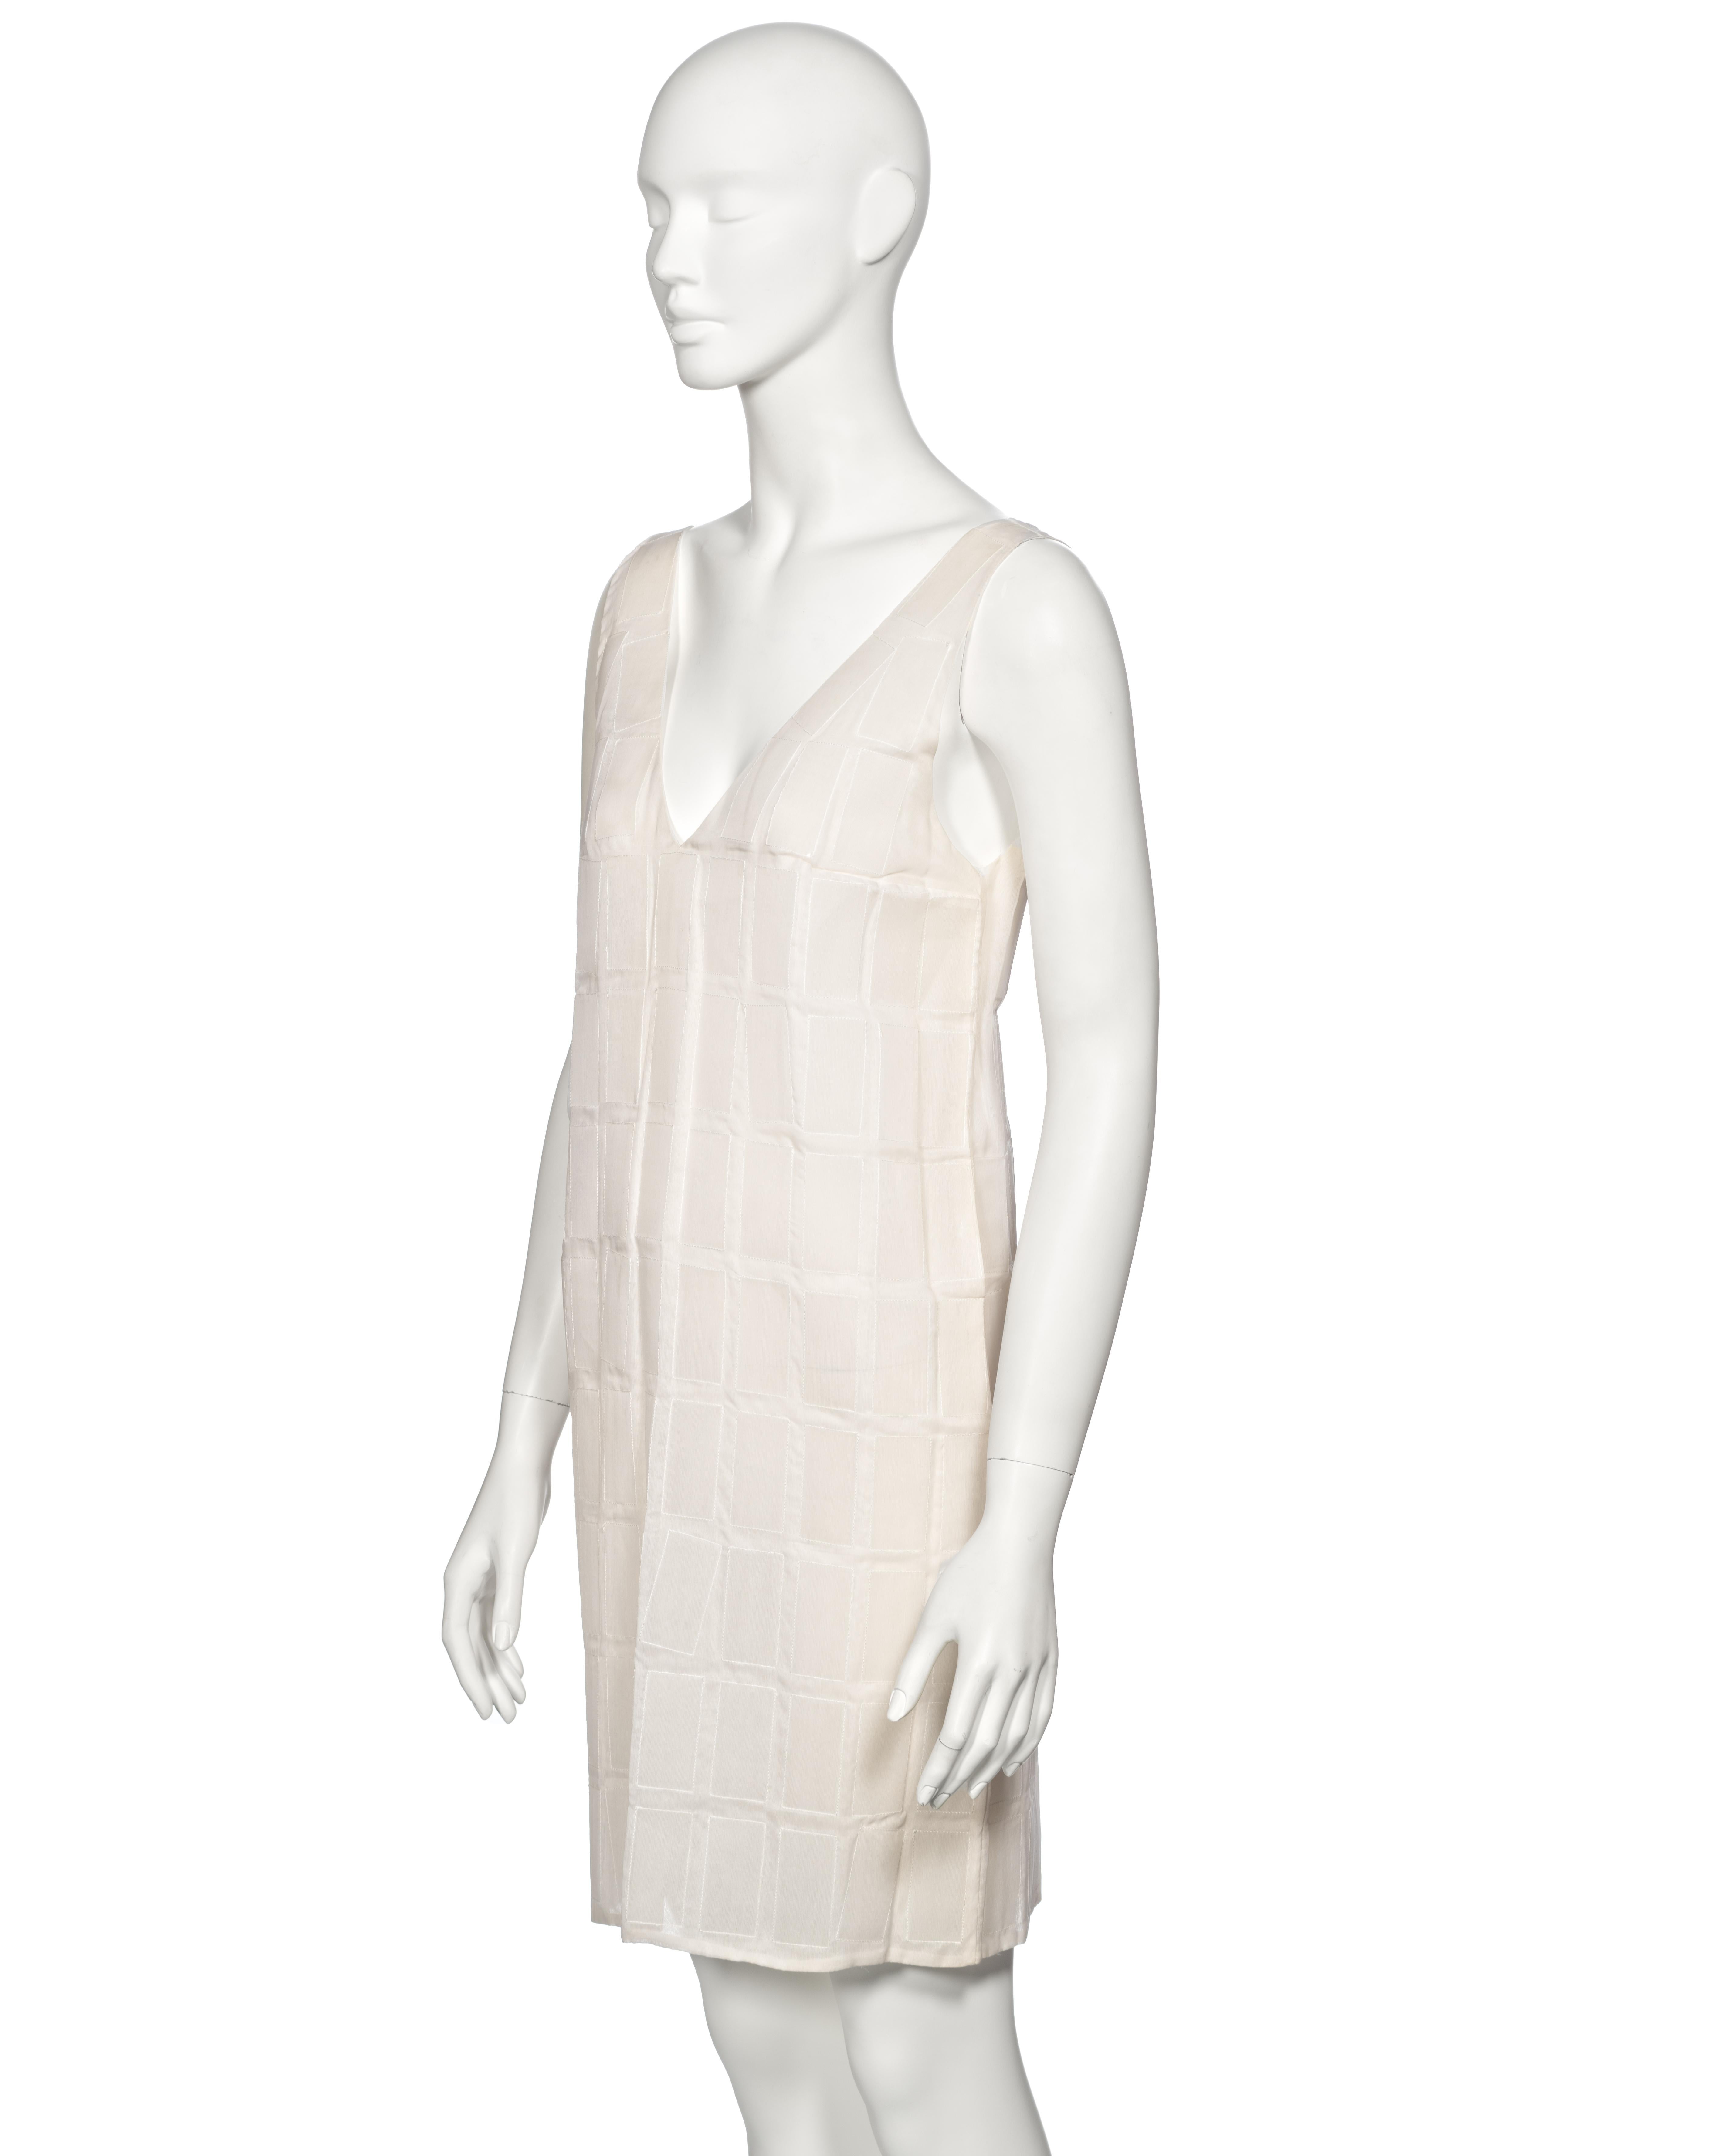 Prada by Miuccia Prada White Silk and Plastic Tile Shift Dress, fw 1998 For Sale 8